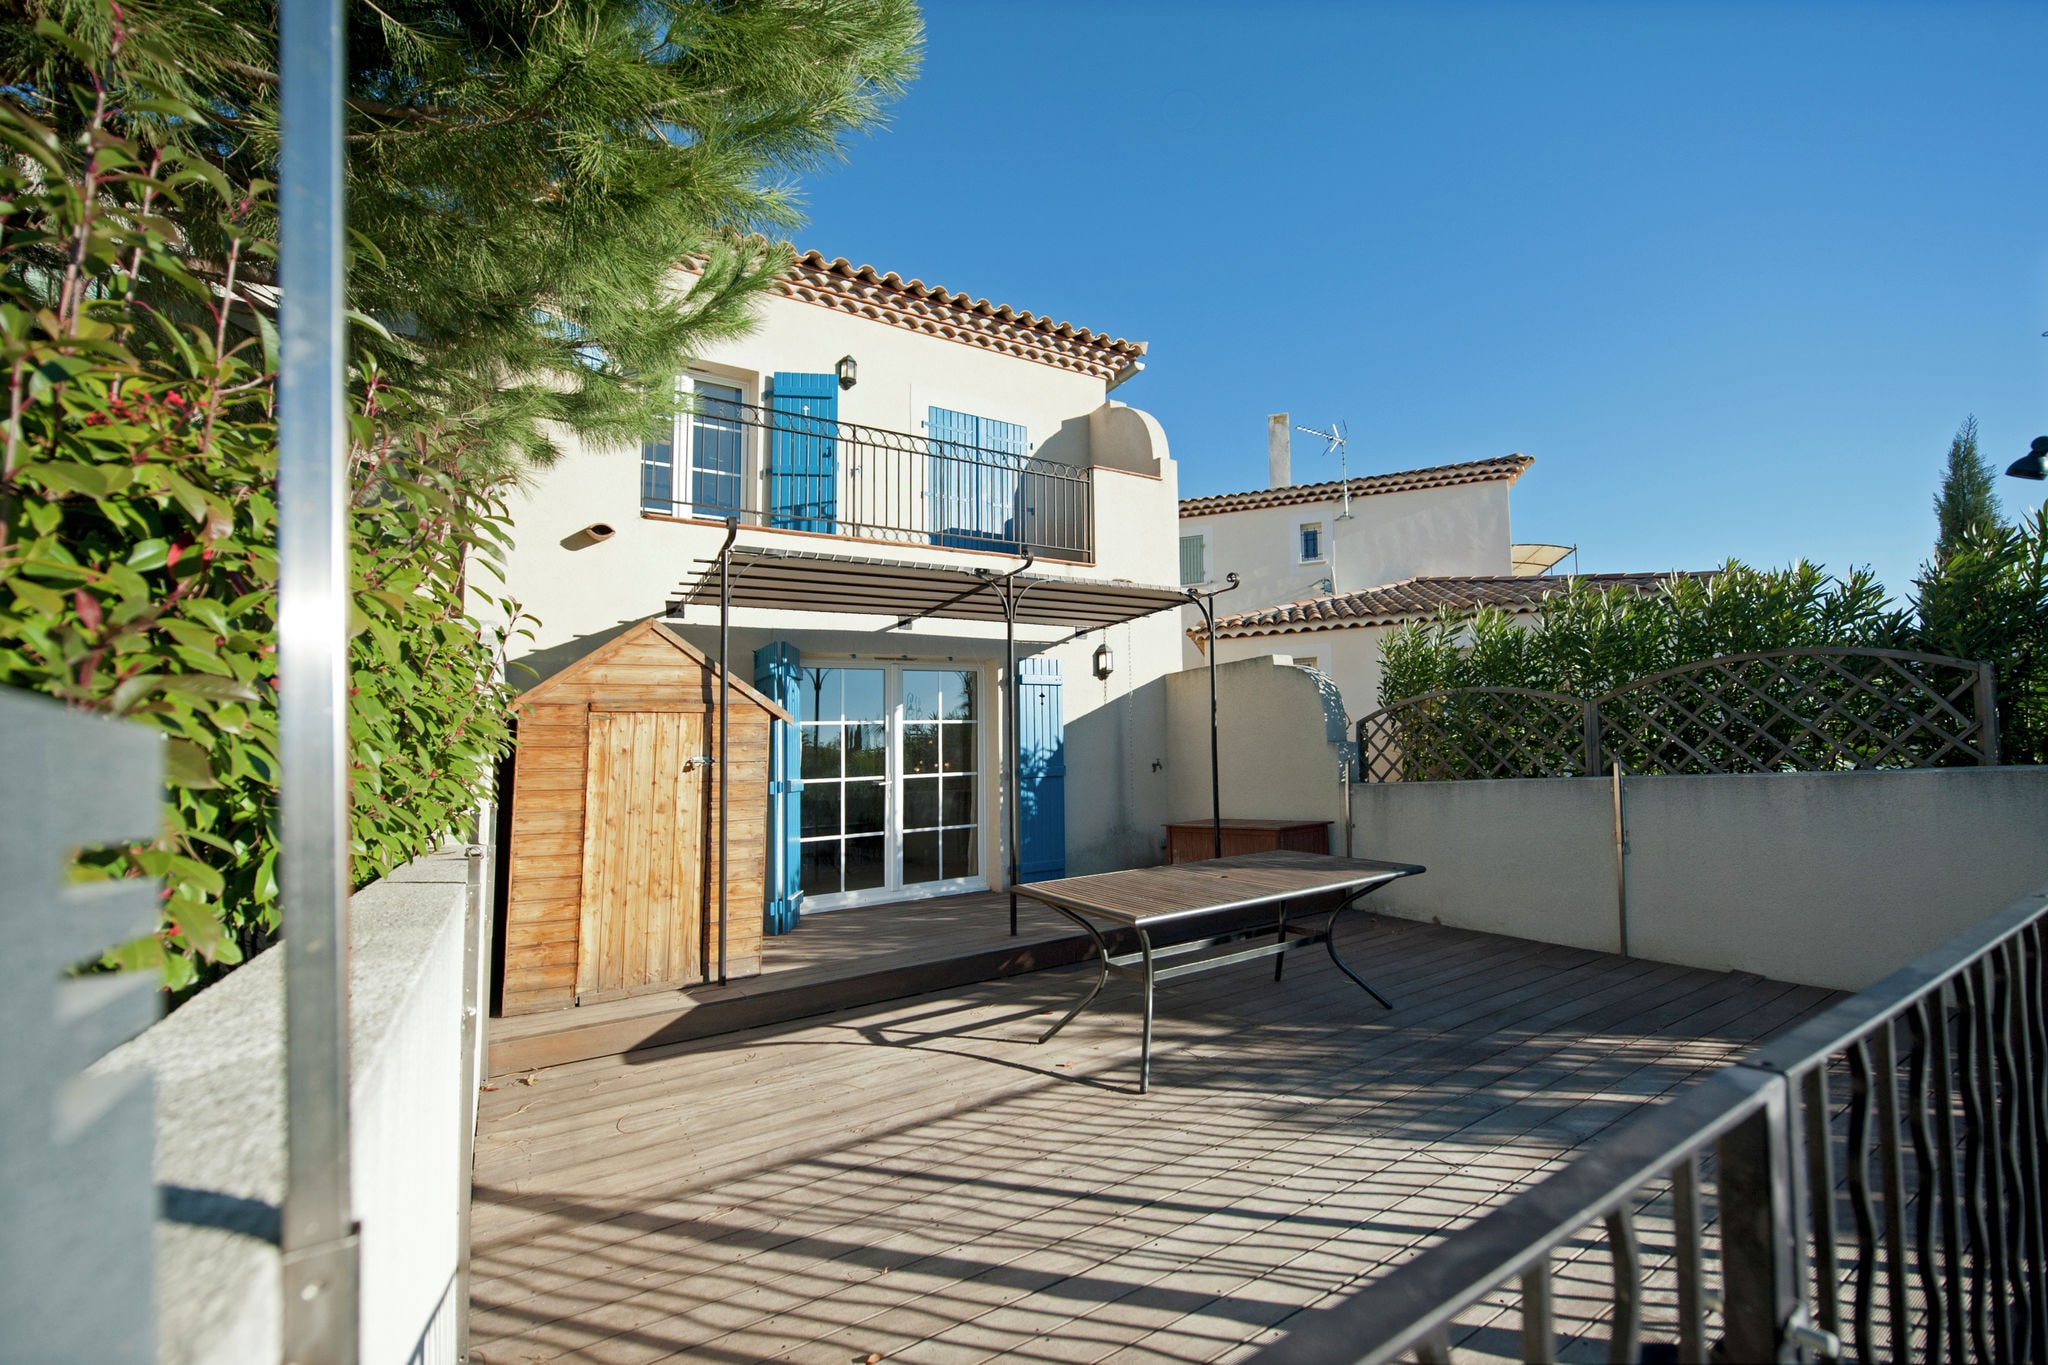 Villa mit Balkon & Terrasse in Meeresnähe in Aigues Mortes